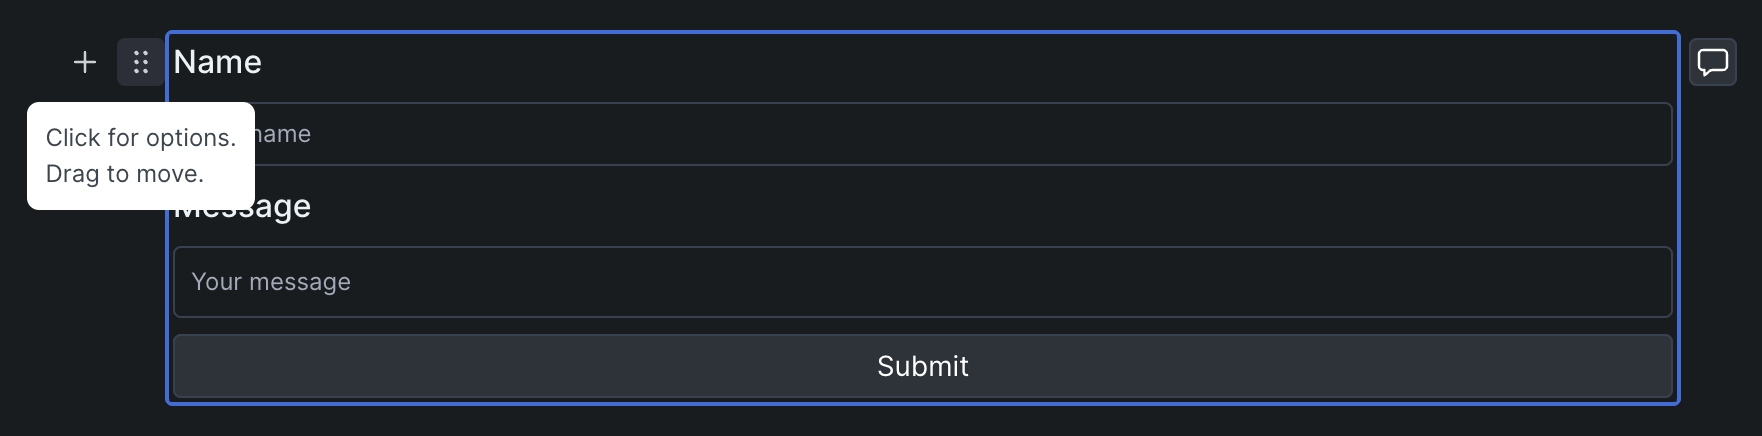 GitBook form options